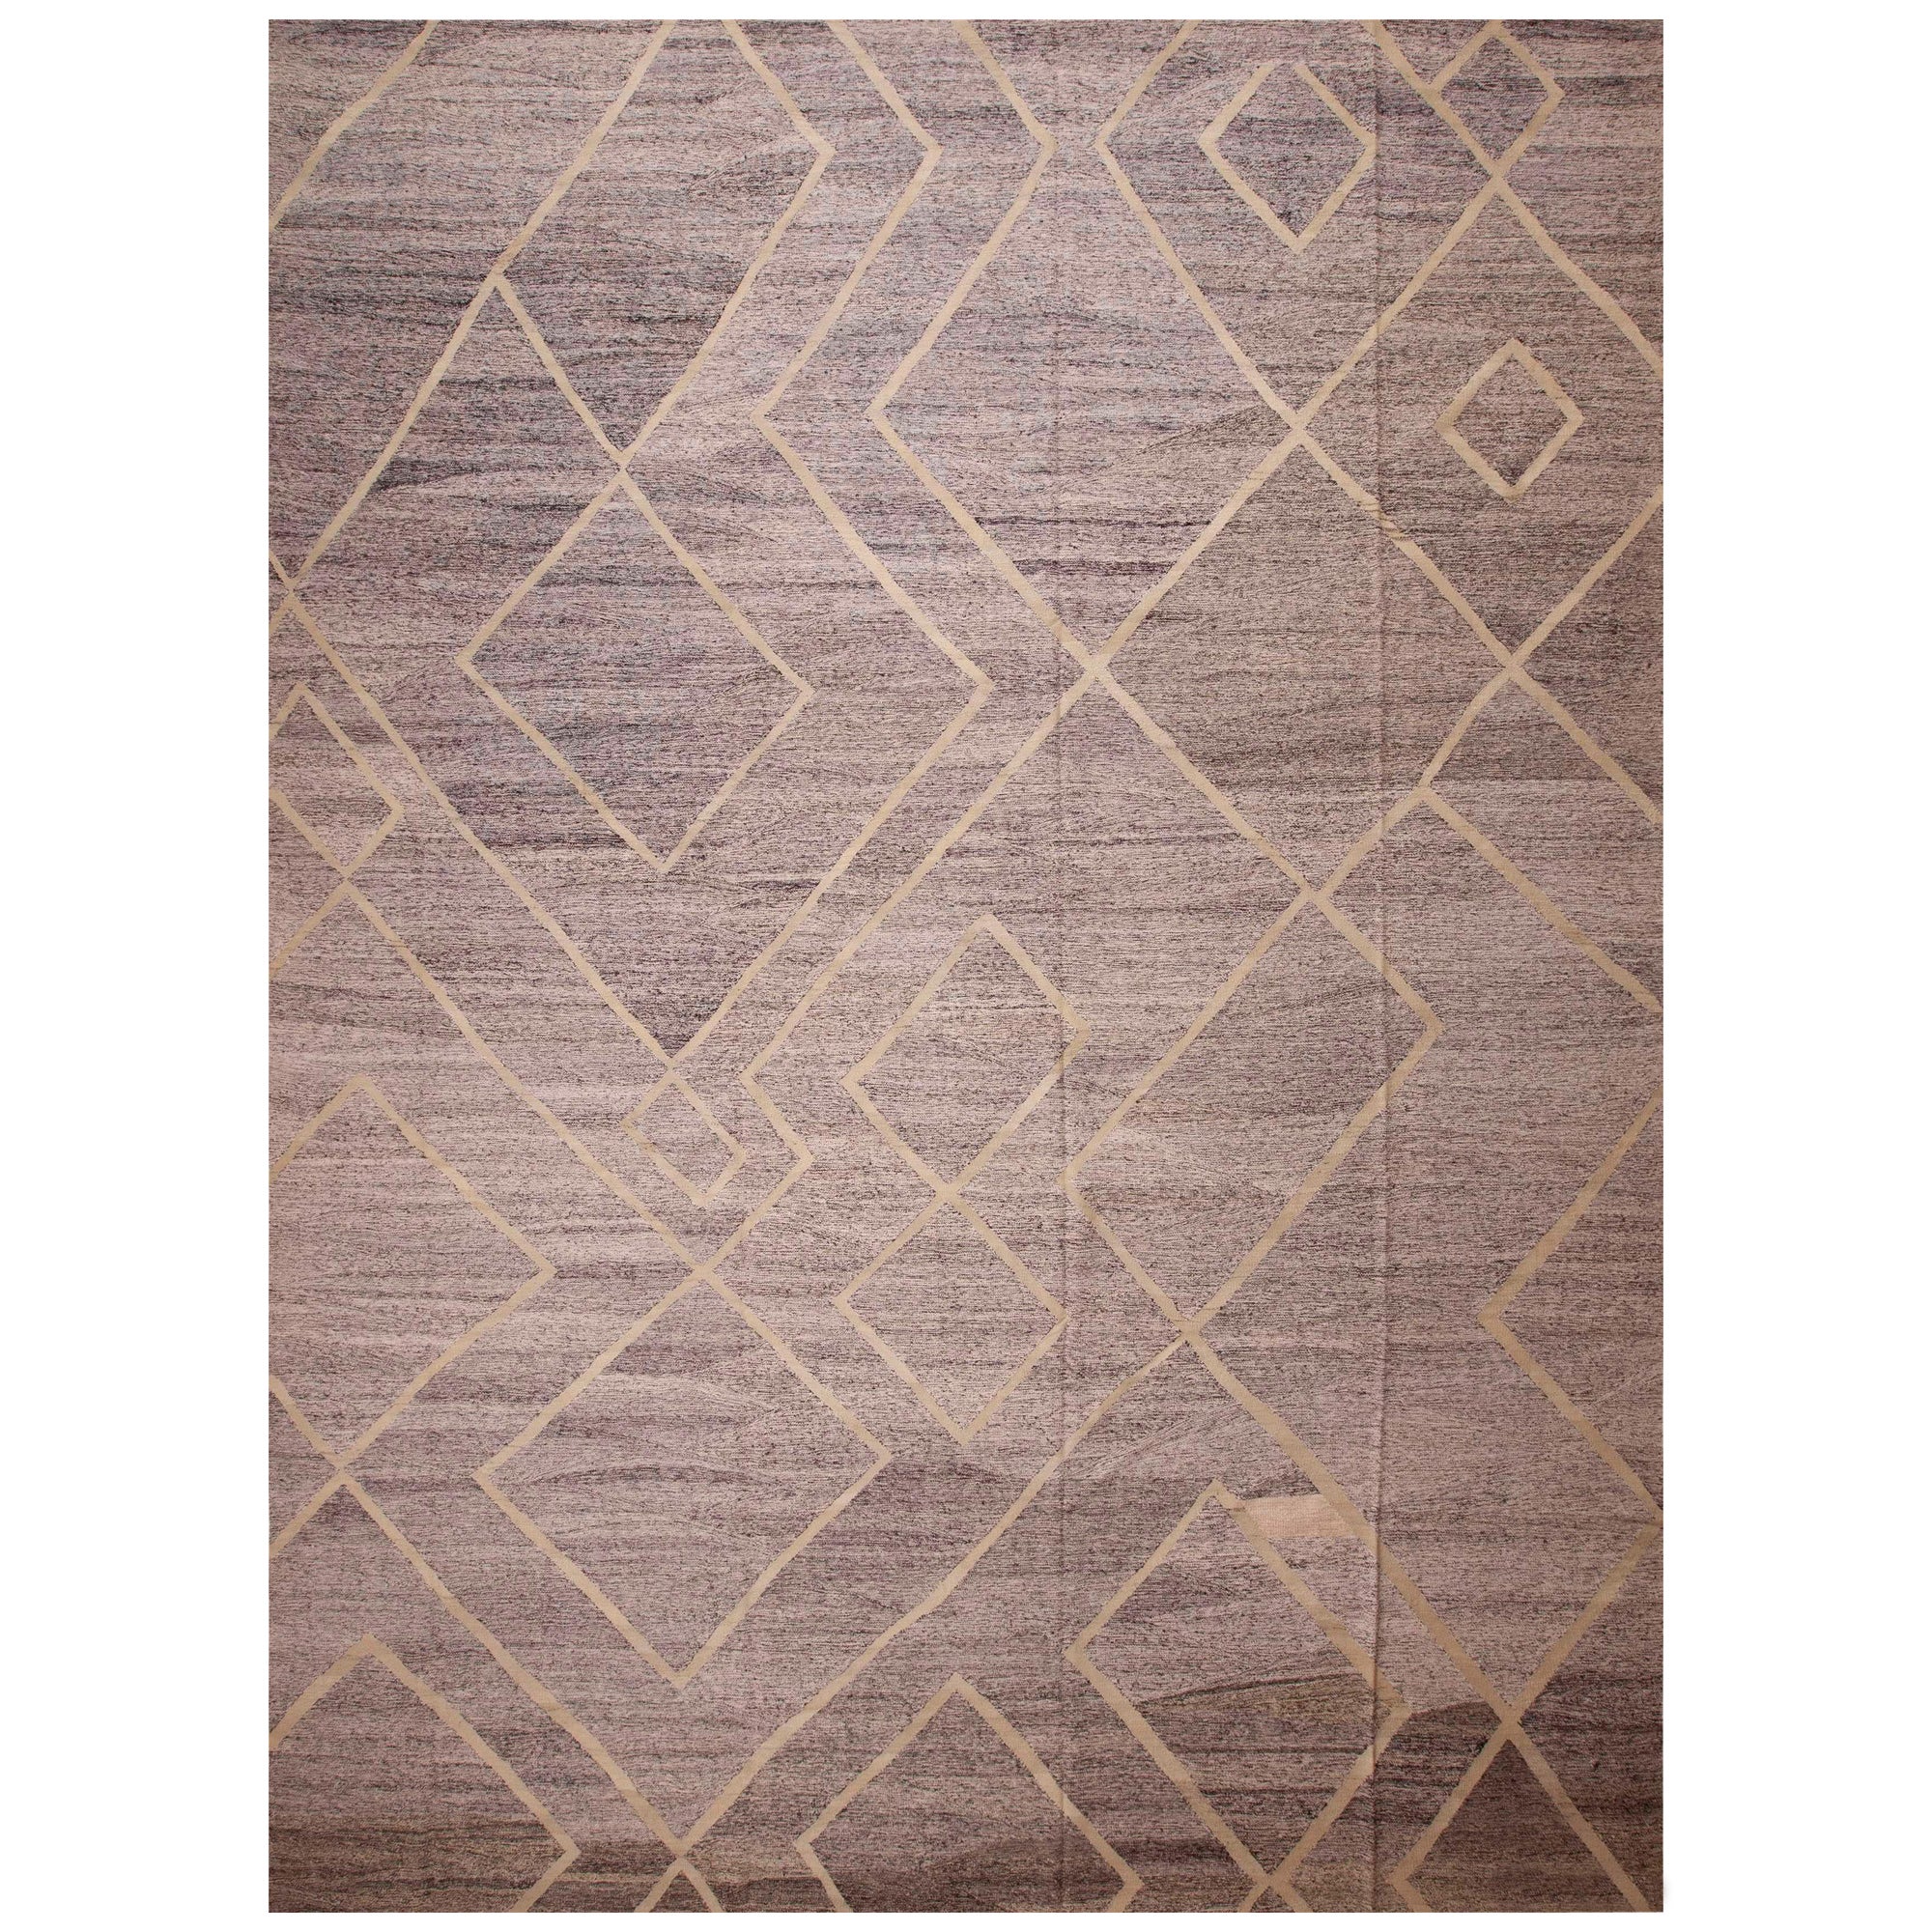 Nazmiyal Collection Tribal Deign Large Modern Flatweave Kilim Rug 14'4" x 19'1" For Sale